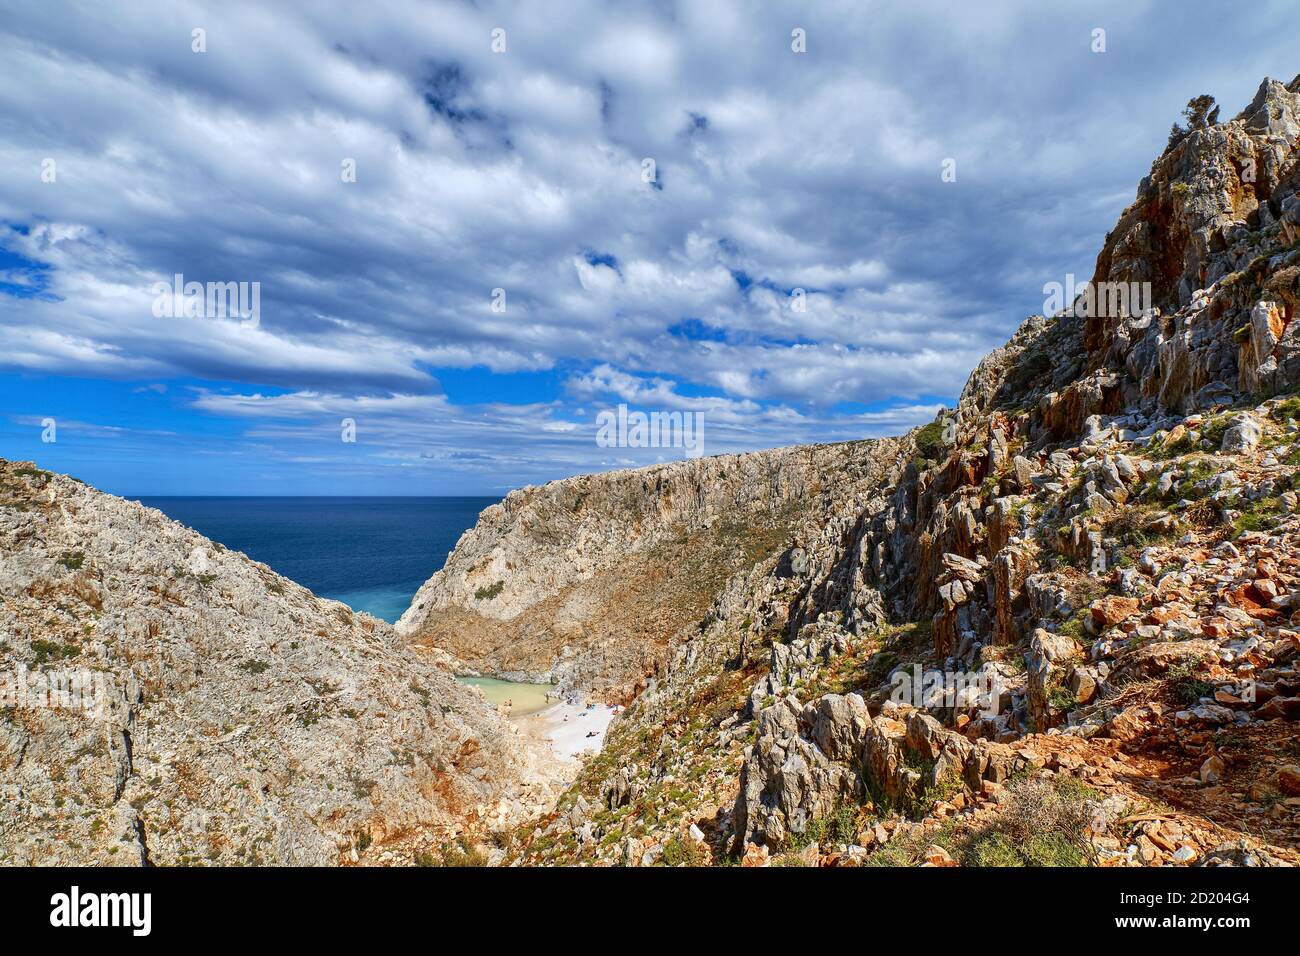 Rocky cliffs of typical Greek sea shores, blue sea, blue sky, beautiful sky. Stefanou beach, Seitan Limania, Chania region, Crete island, Greece Stock Photo